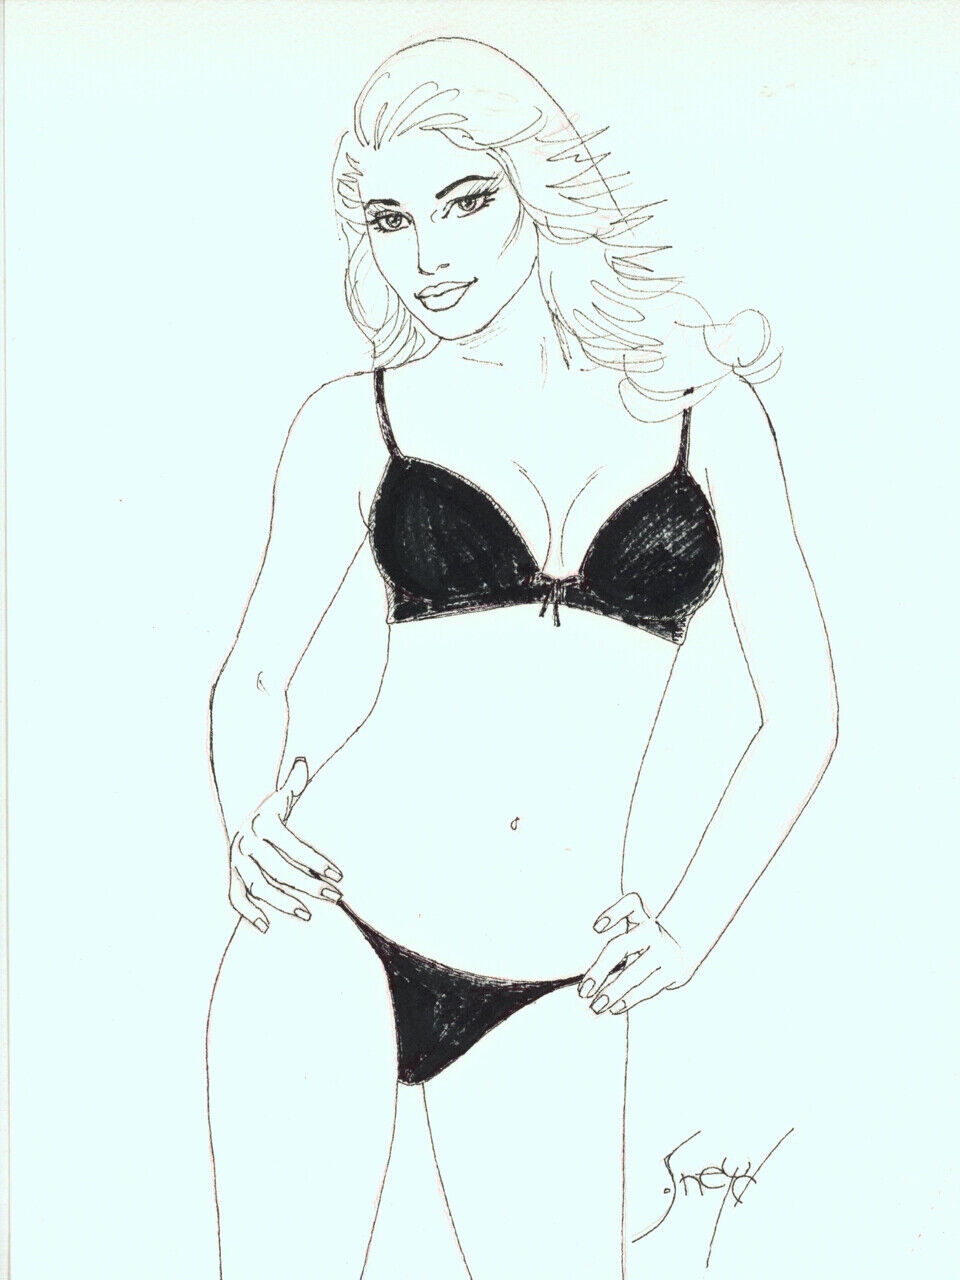 Playboy Artist Doug Sneyd Signed Original Art Sketch Girl In Black Bikini